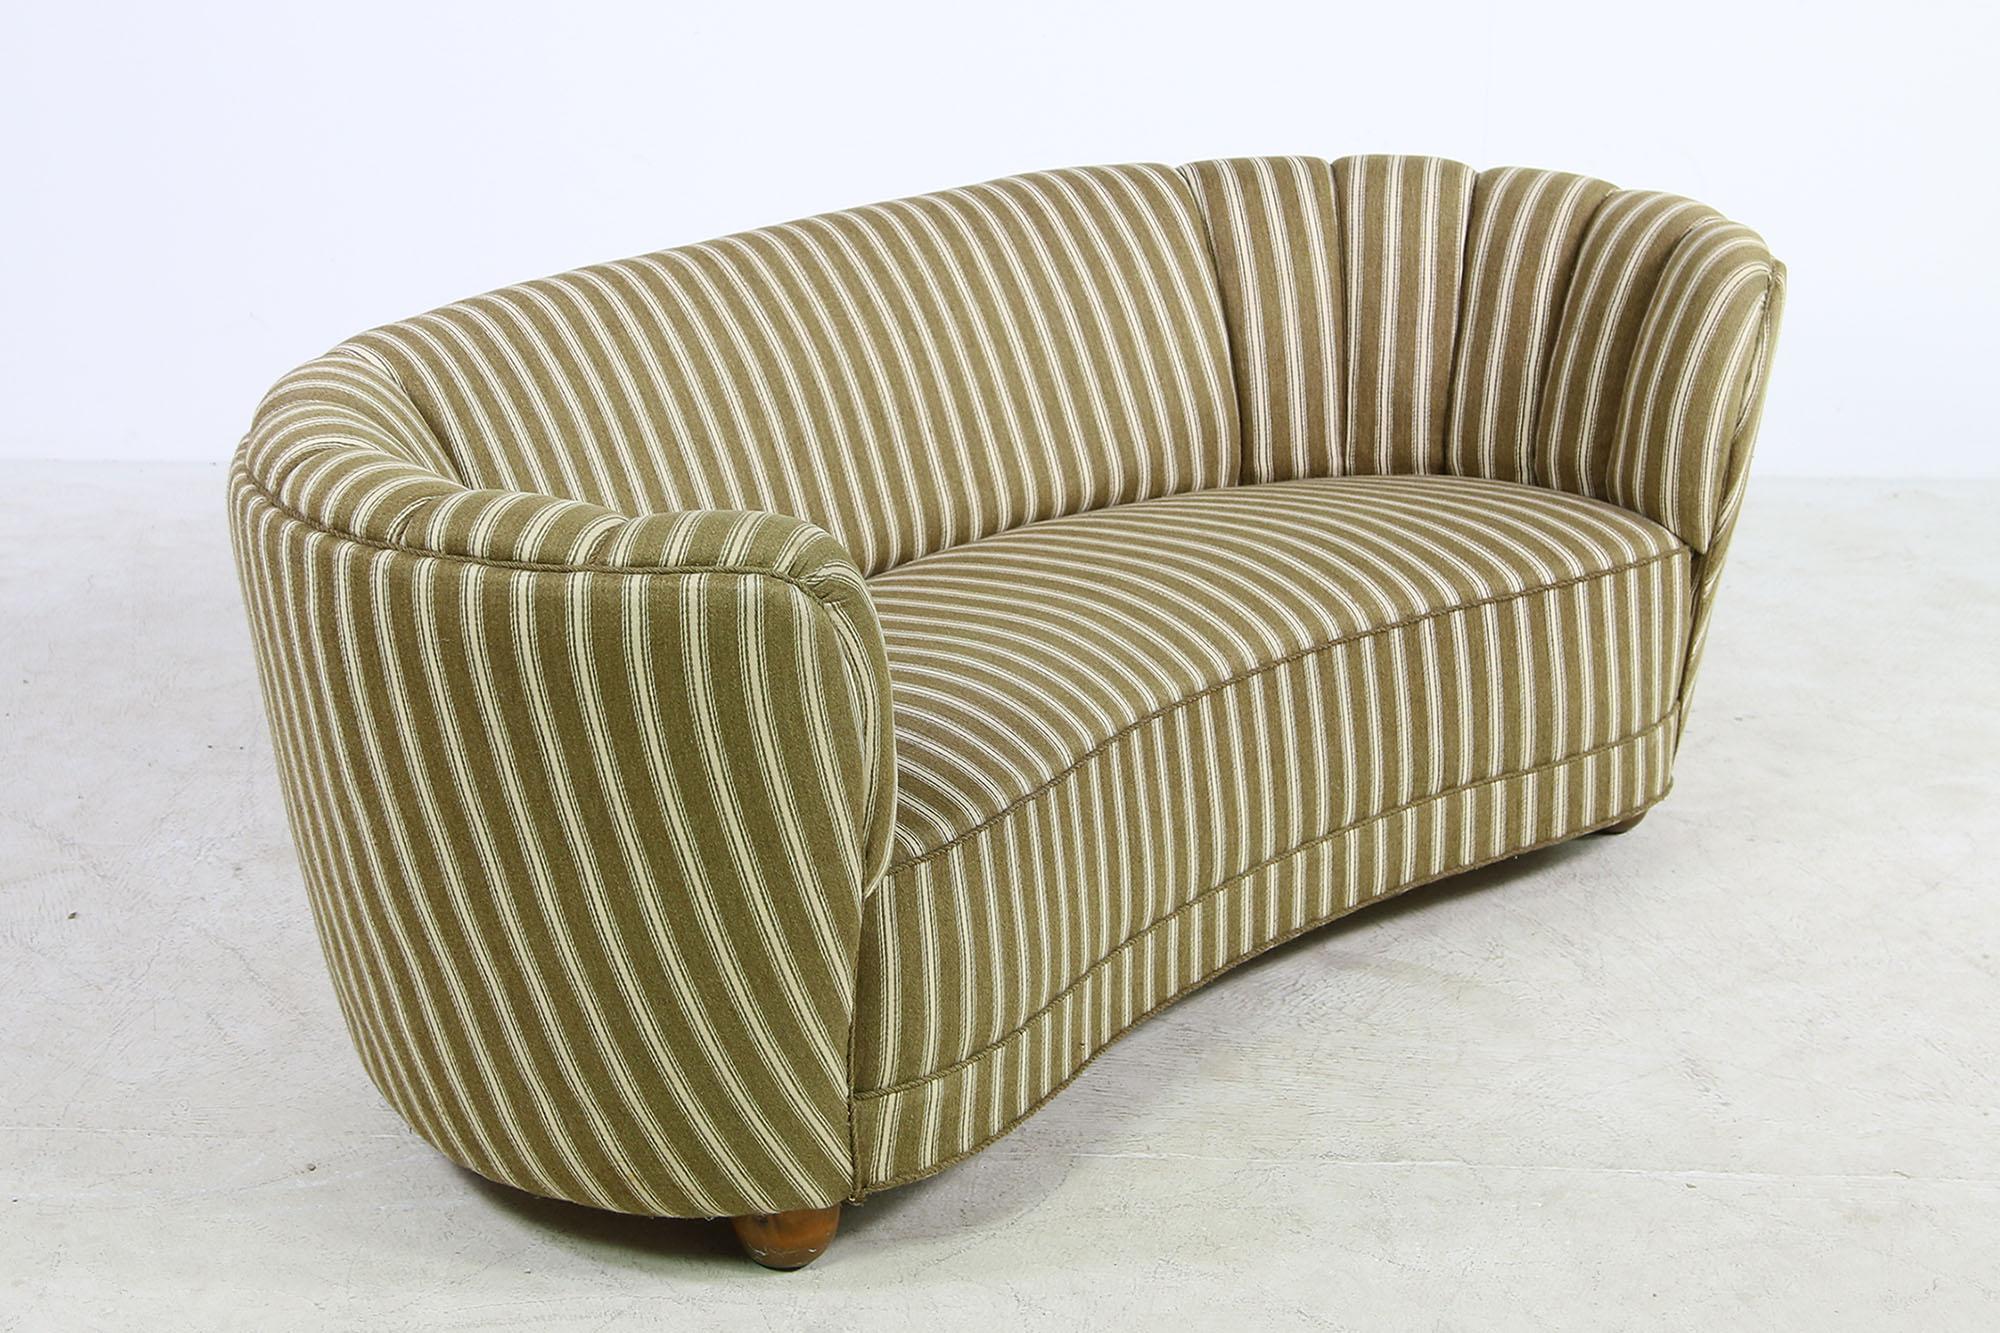 Mid-Century Modern 1950s Danish Curved Striped Sofa, Mid Century Modern Design, Authentic Vintage